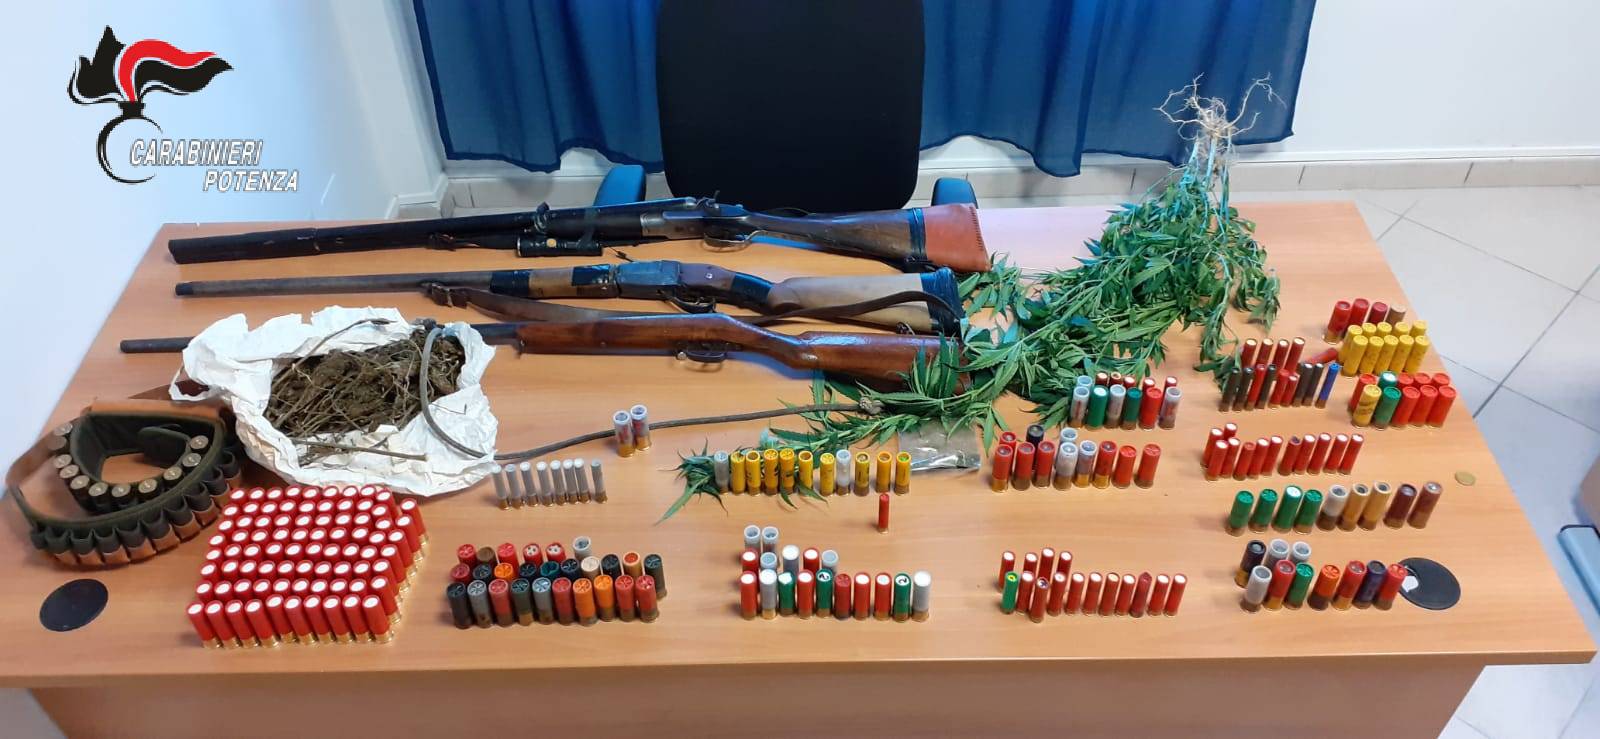 Droga, armi e munizioni nascosti in campagna. Arrestato 31enne a Senise